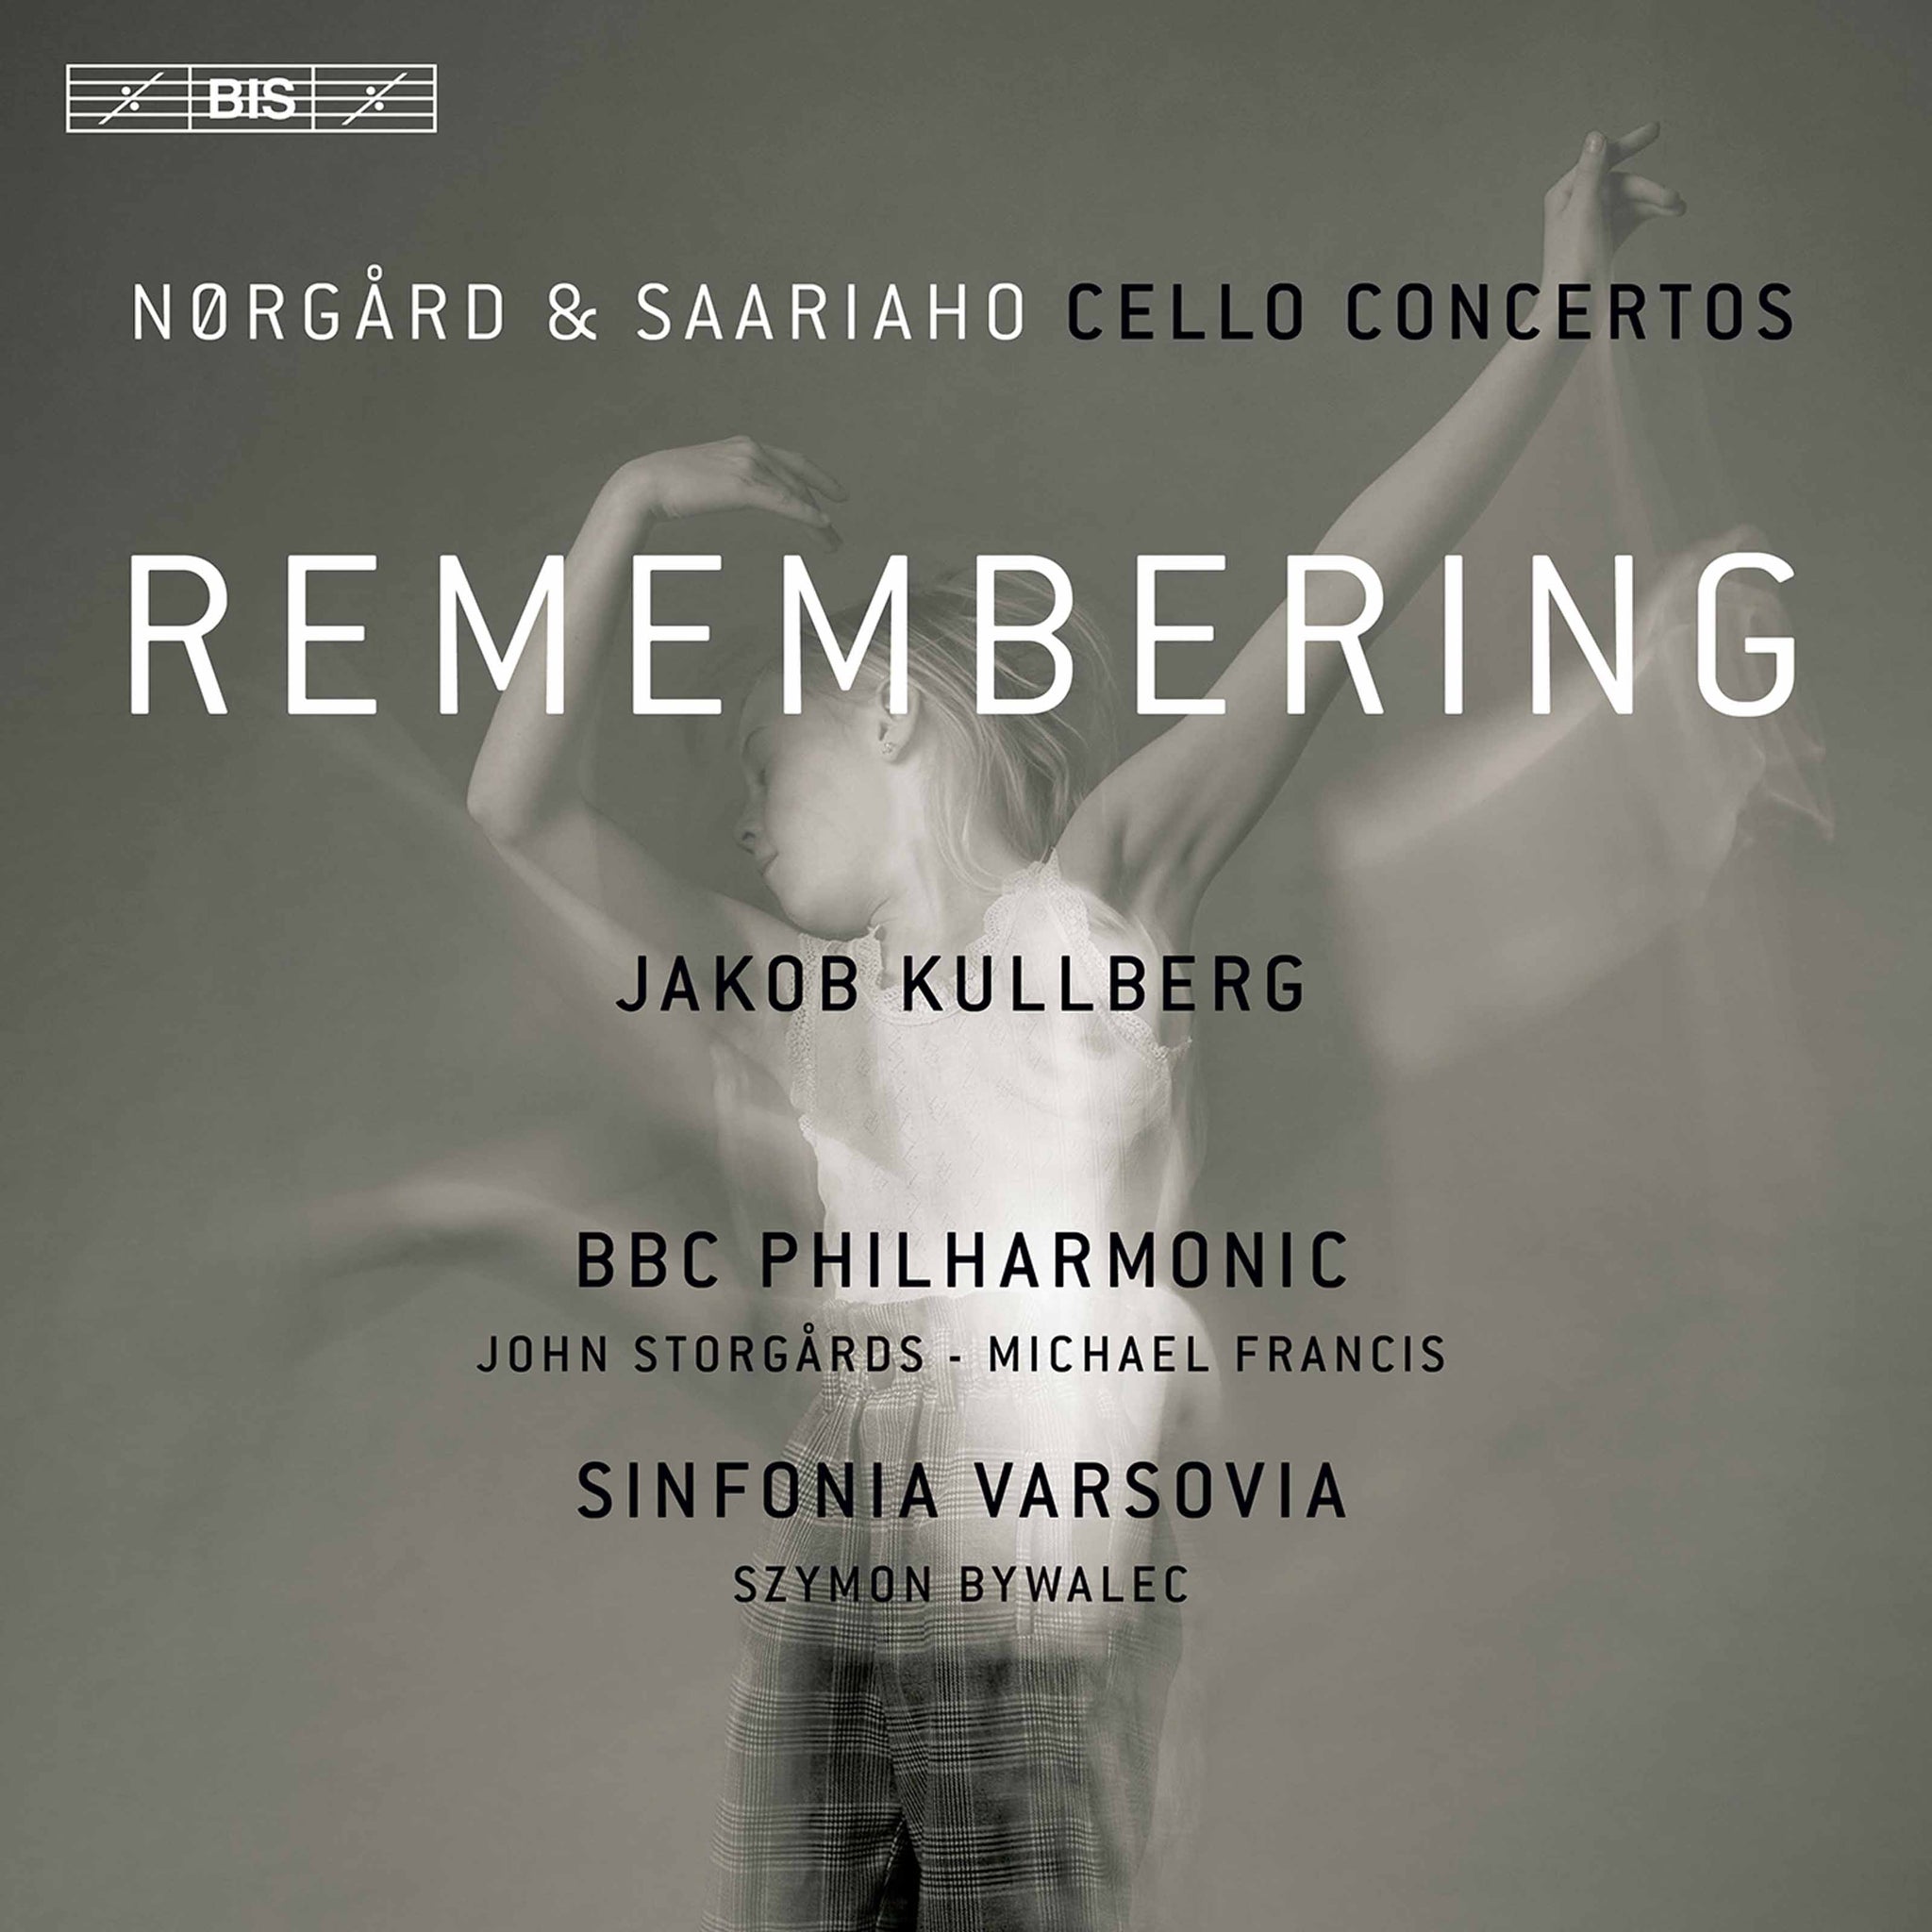 Kullberg, Nørgård, Saariaho: Remembering / Kullberg, Bywalec, Francis, Storgårds, BBC Philharmonic Orchestra, Sinfonia Varsovia